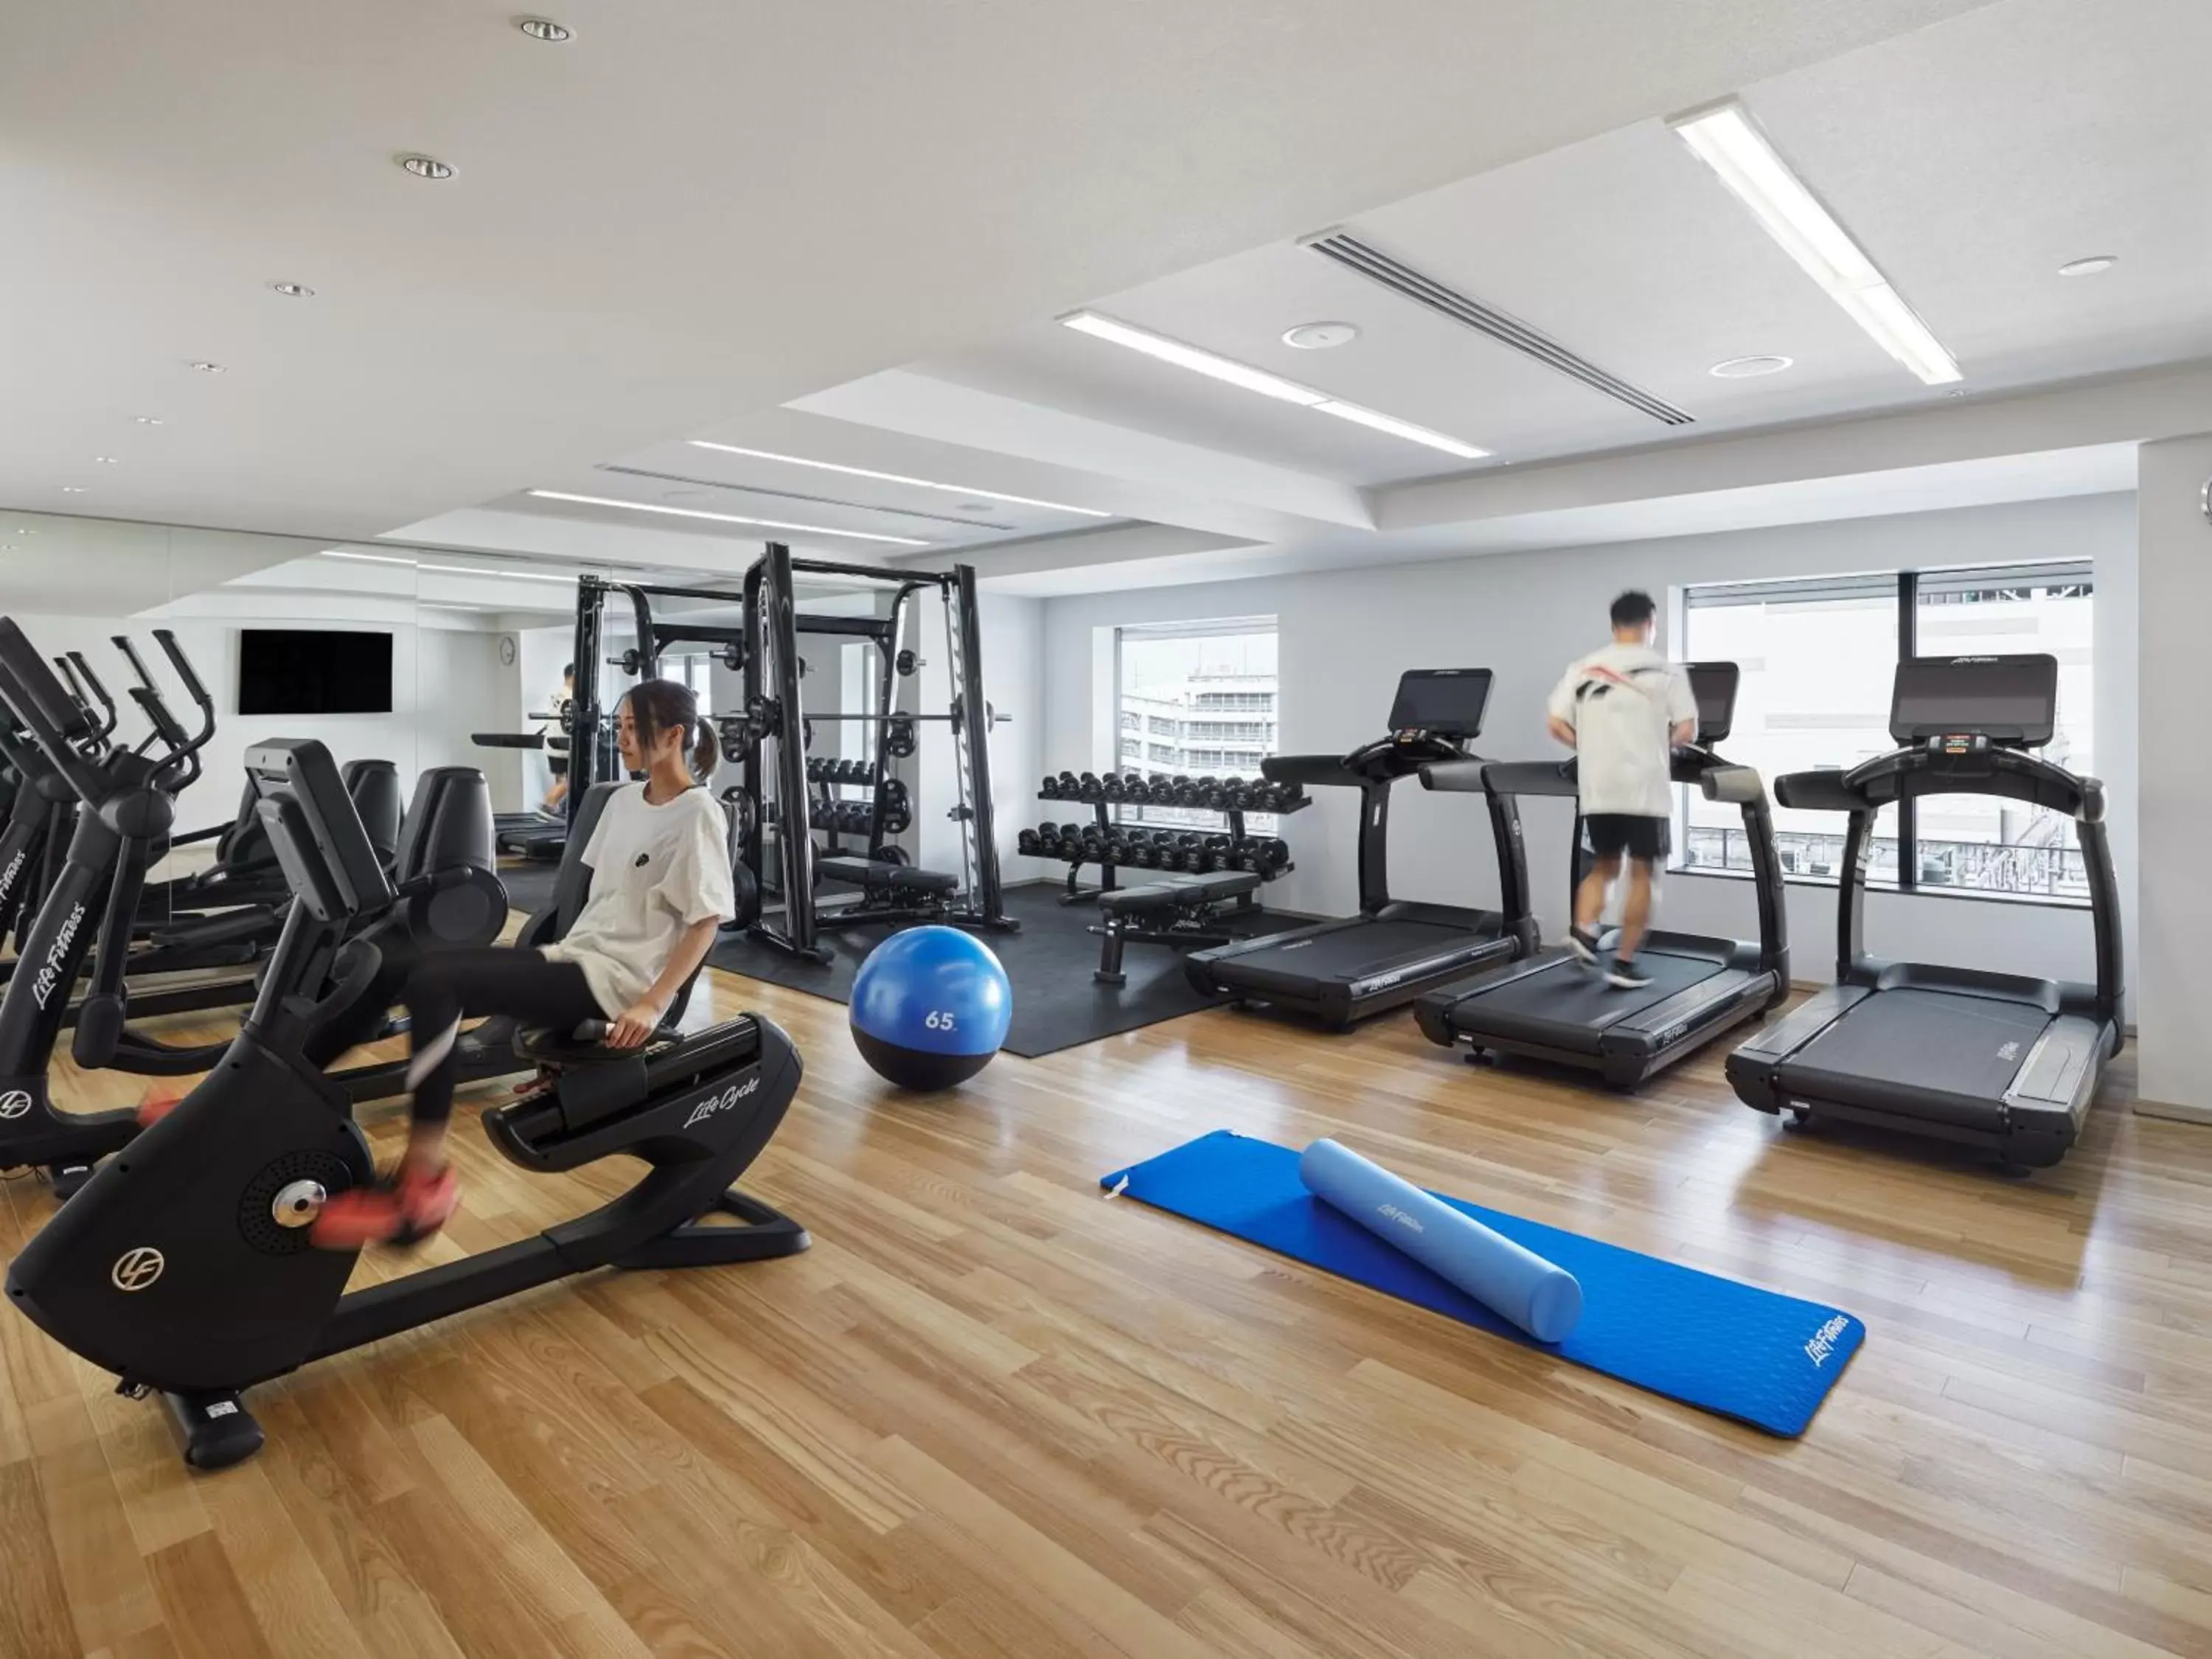 Fitness centre/facilities, Fitness Center/Facilities in Hyatt House Kanazawa